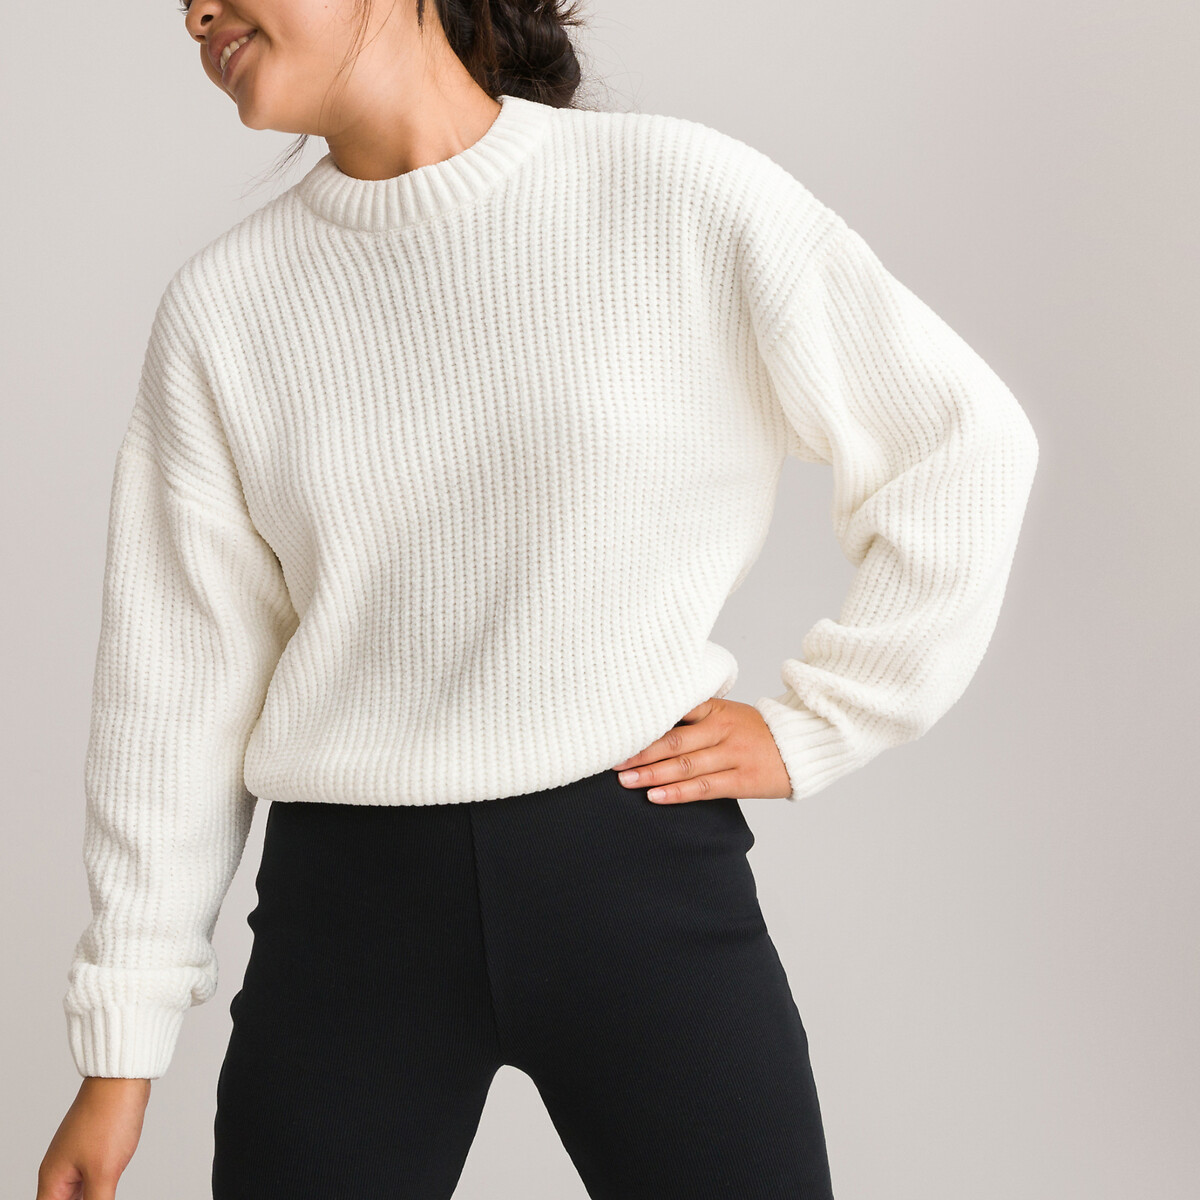 KINDER Pullovers & Sweatshirts Stickerei La Redoute sweatshirt Grau 12Y Rabatt 63 % 